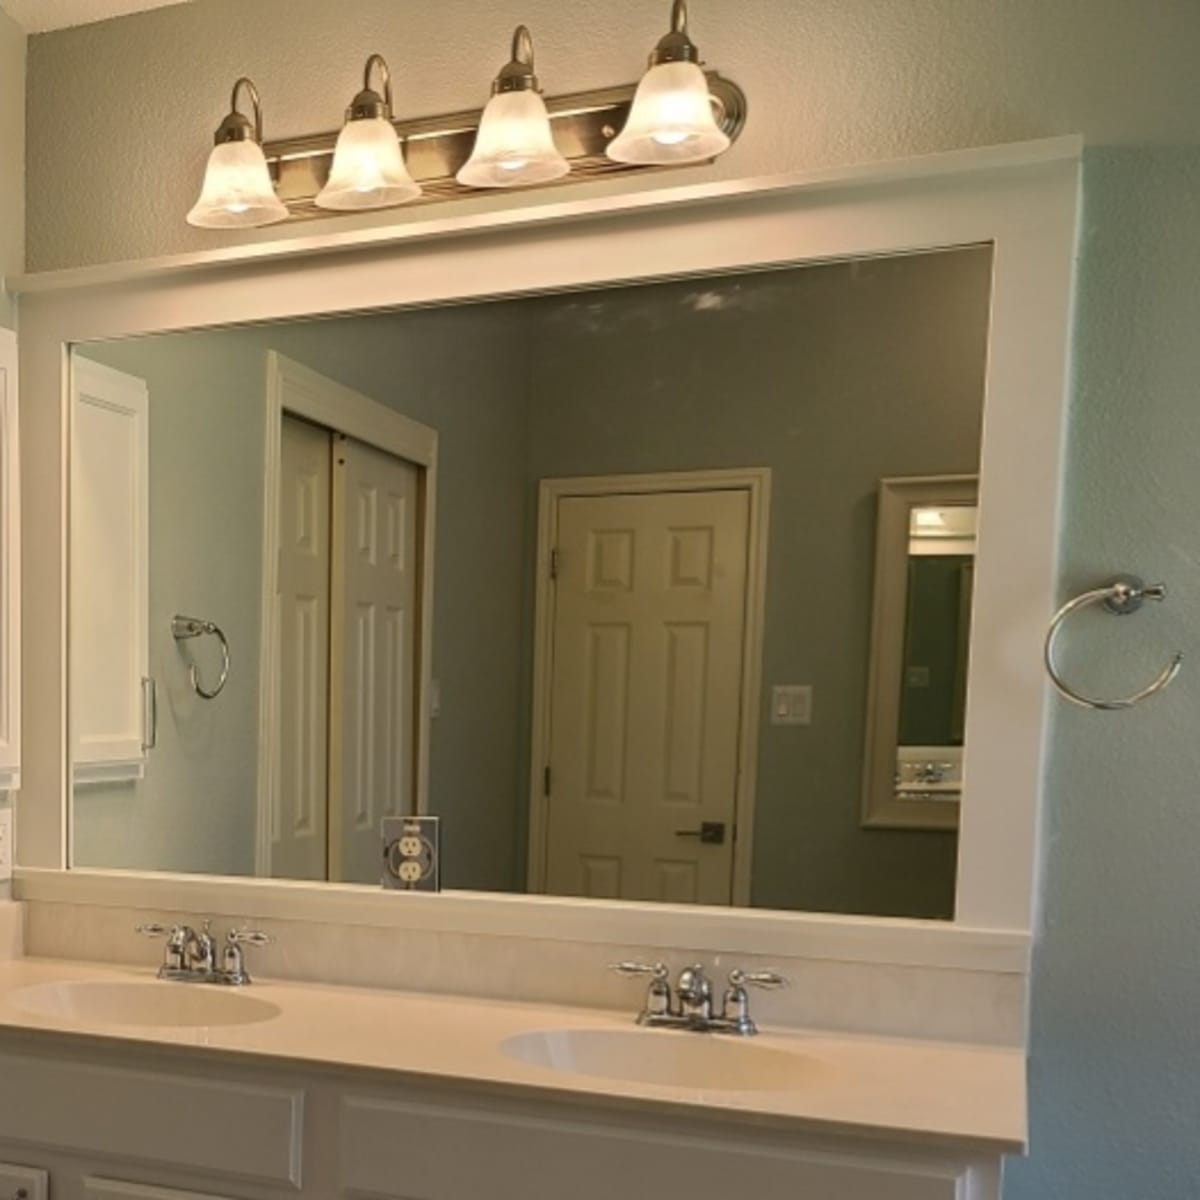 how to frame a builder-grade bathroom mirror the easy way - dengarden